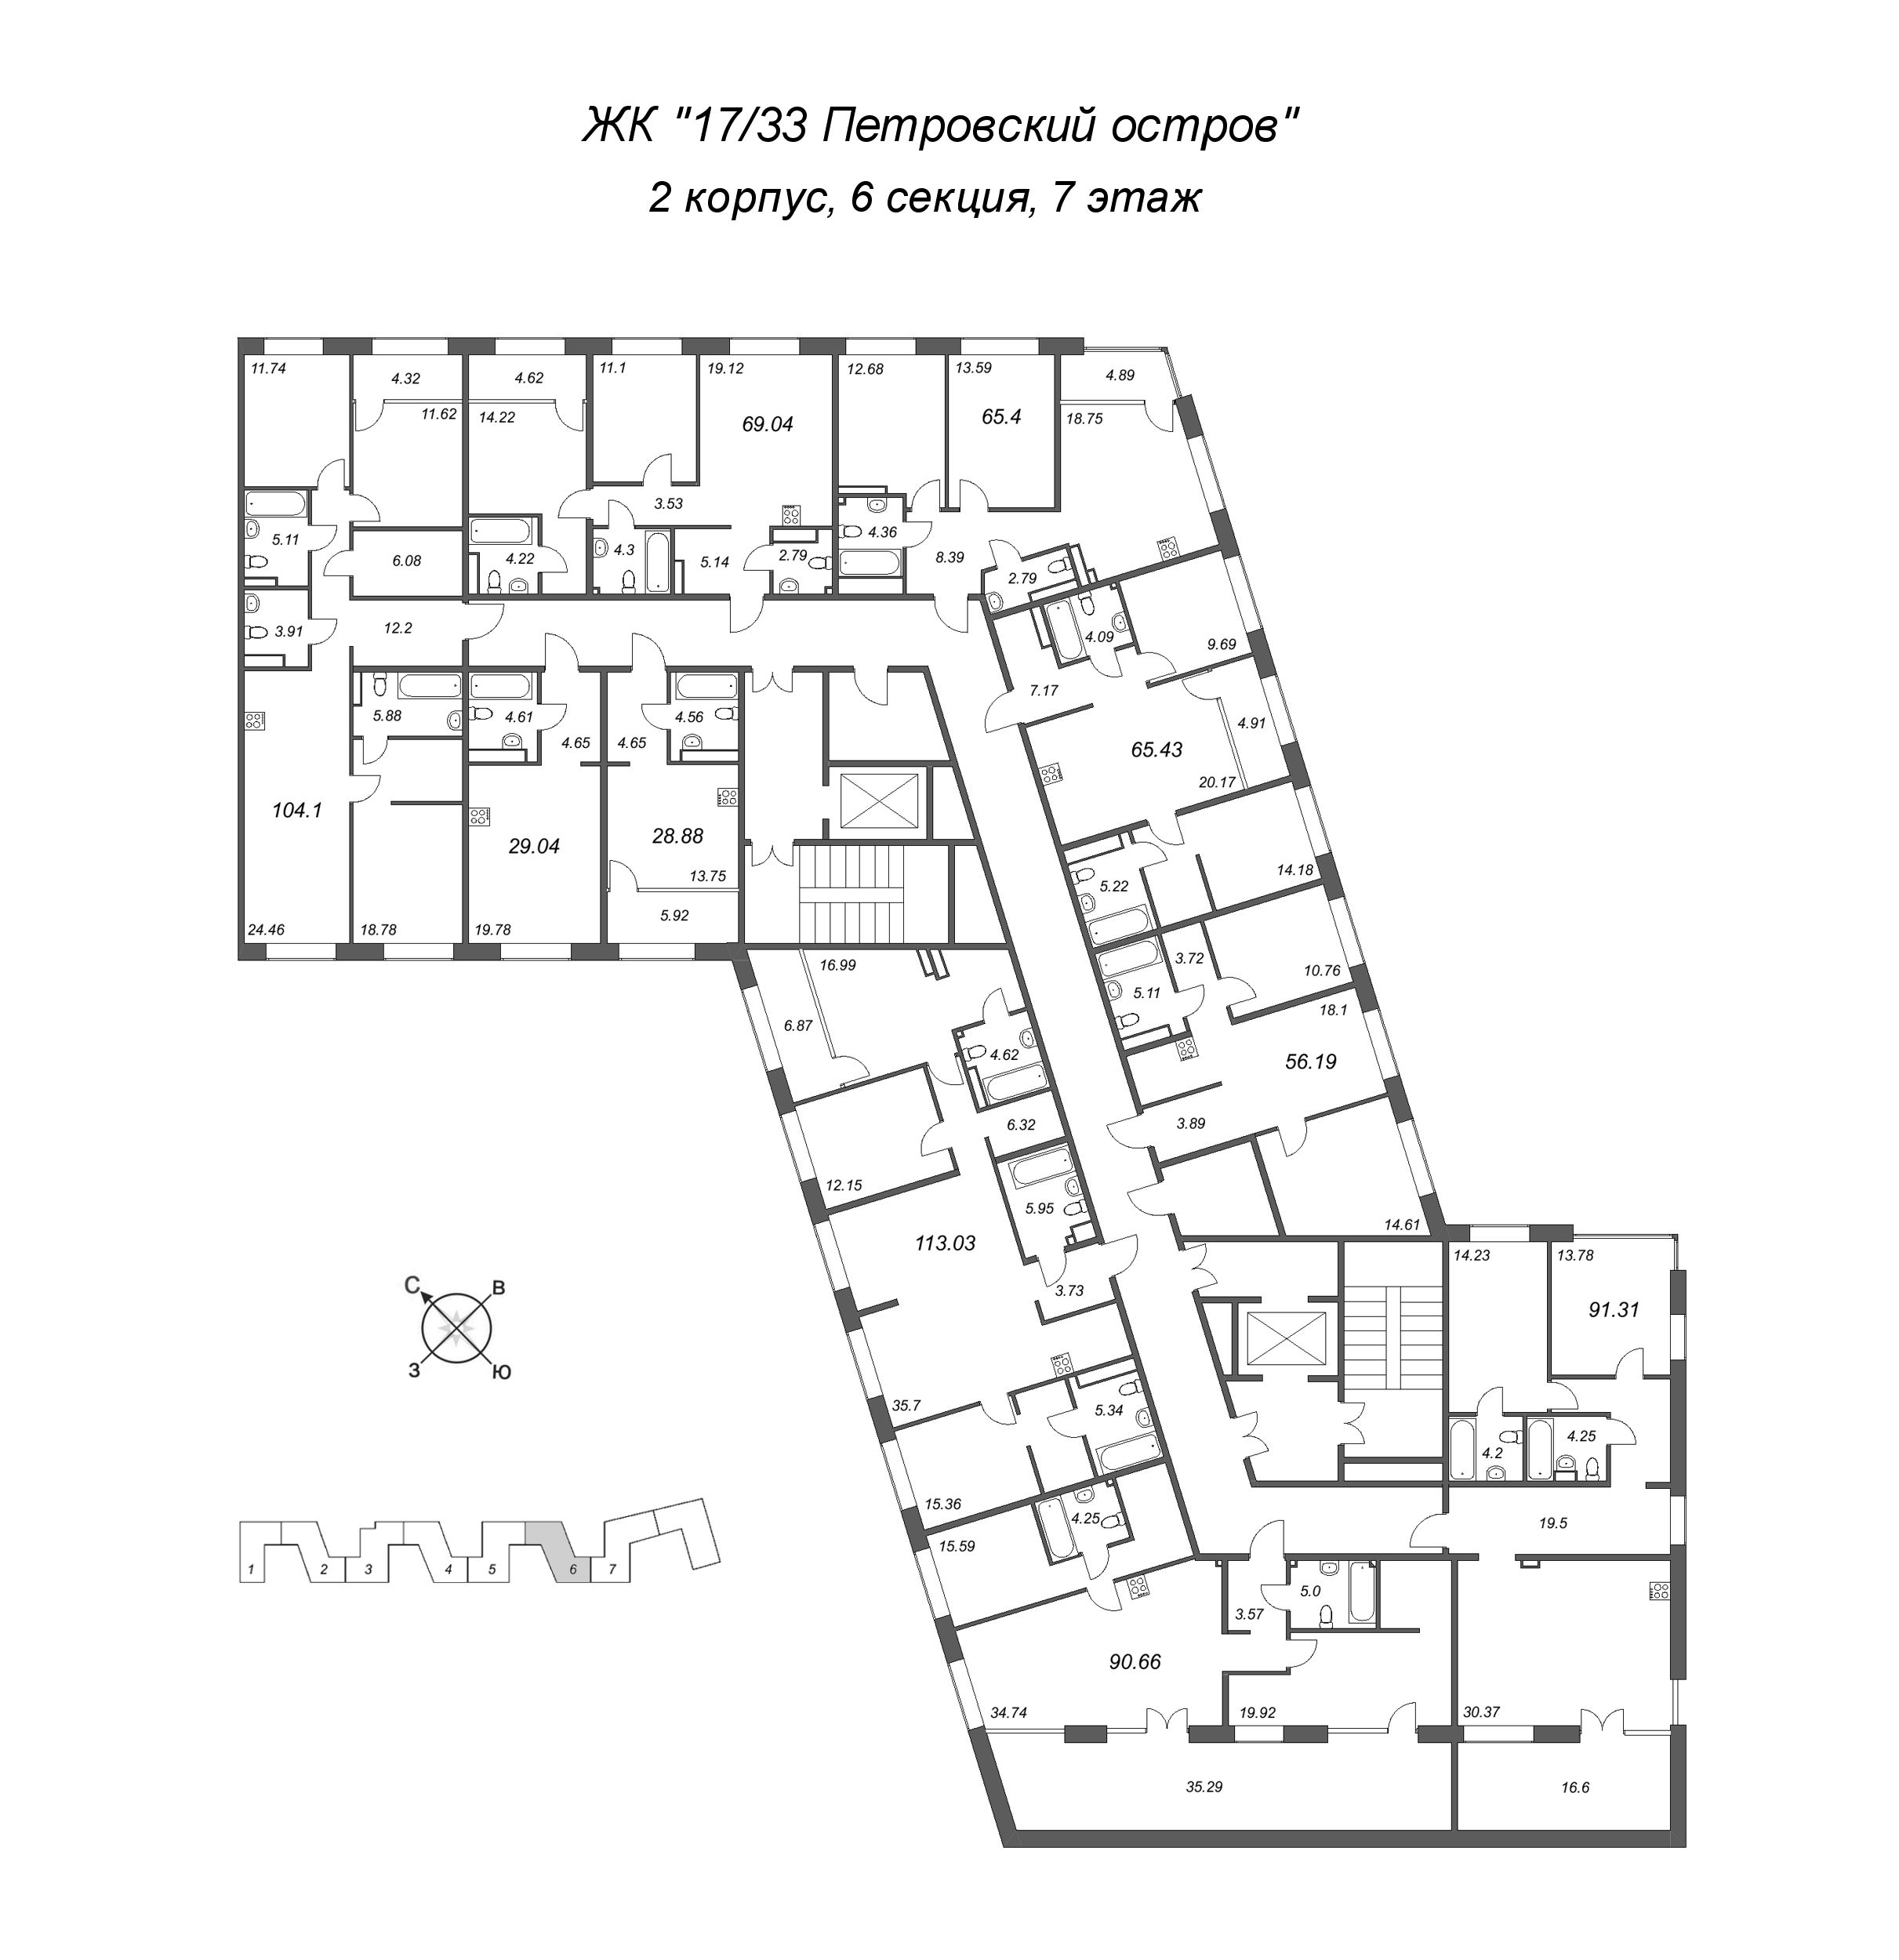 4-комнатная (Евро) квартира, 113.03 м² - планировка этажа